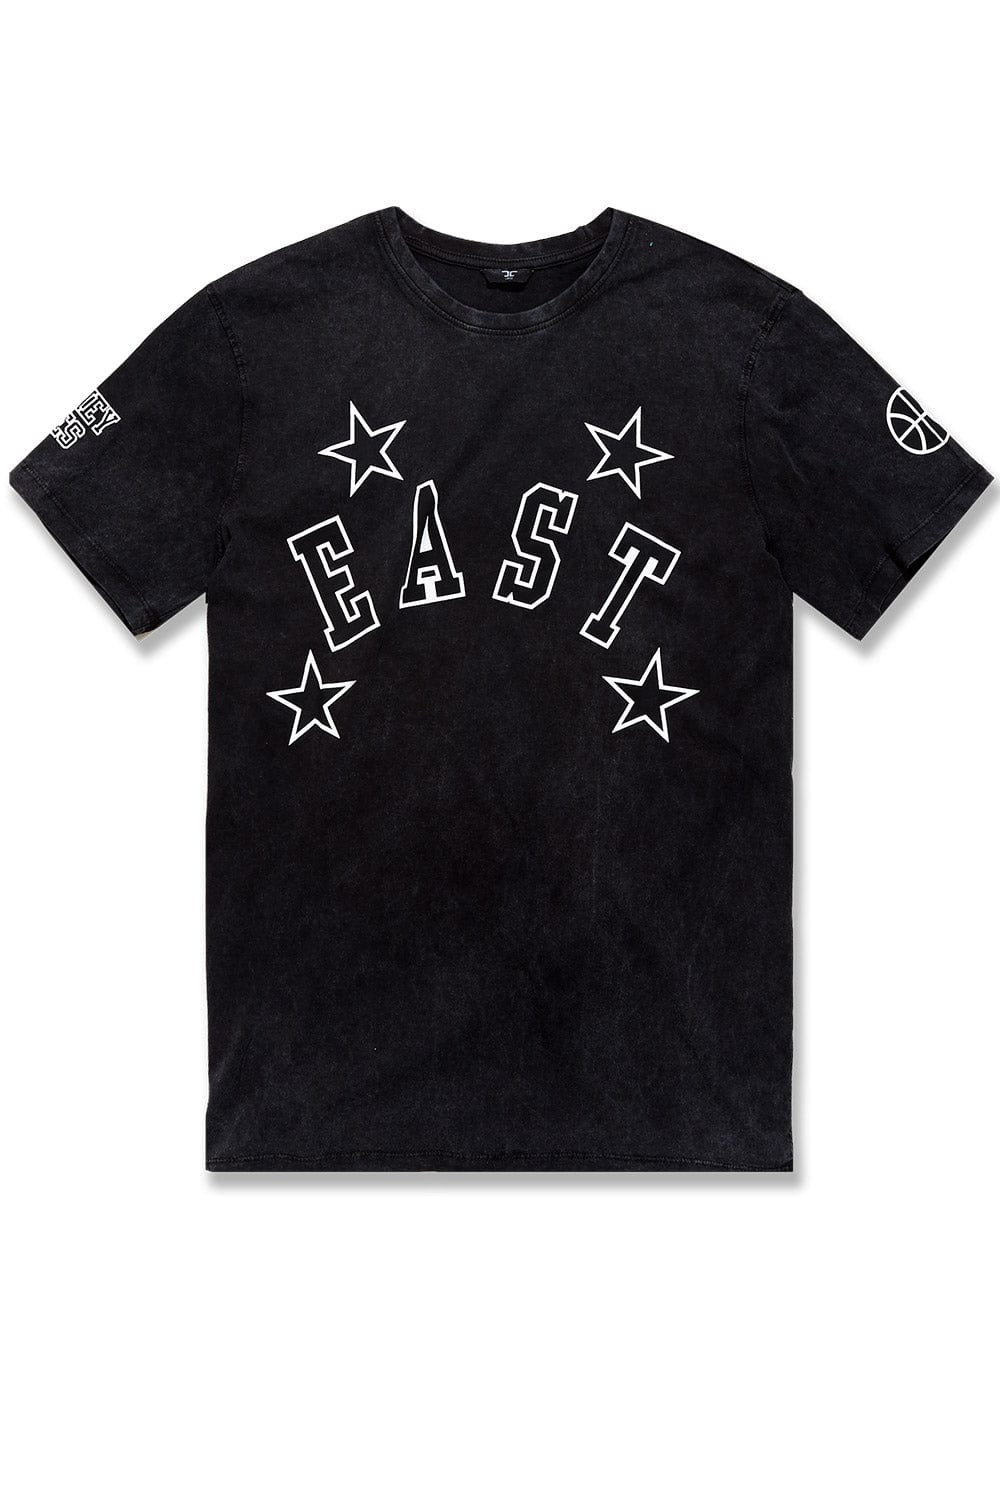 Beast Coast T-Shirt (Brooklyn)